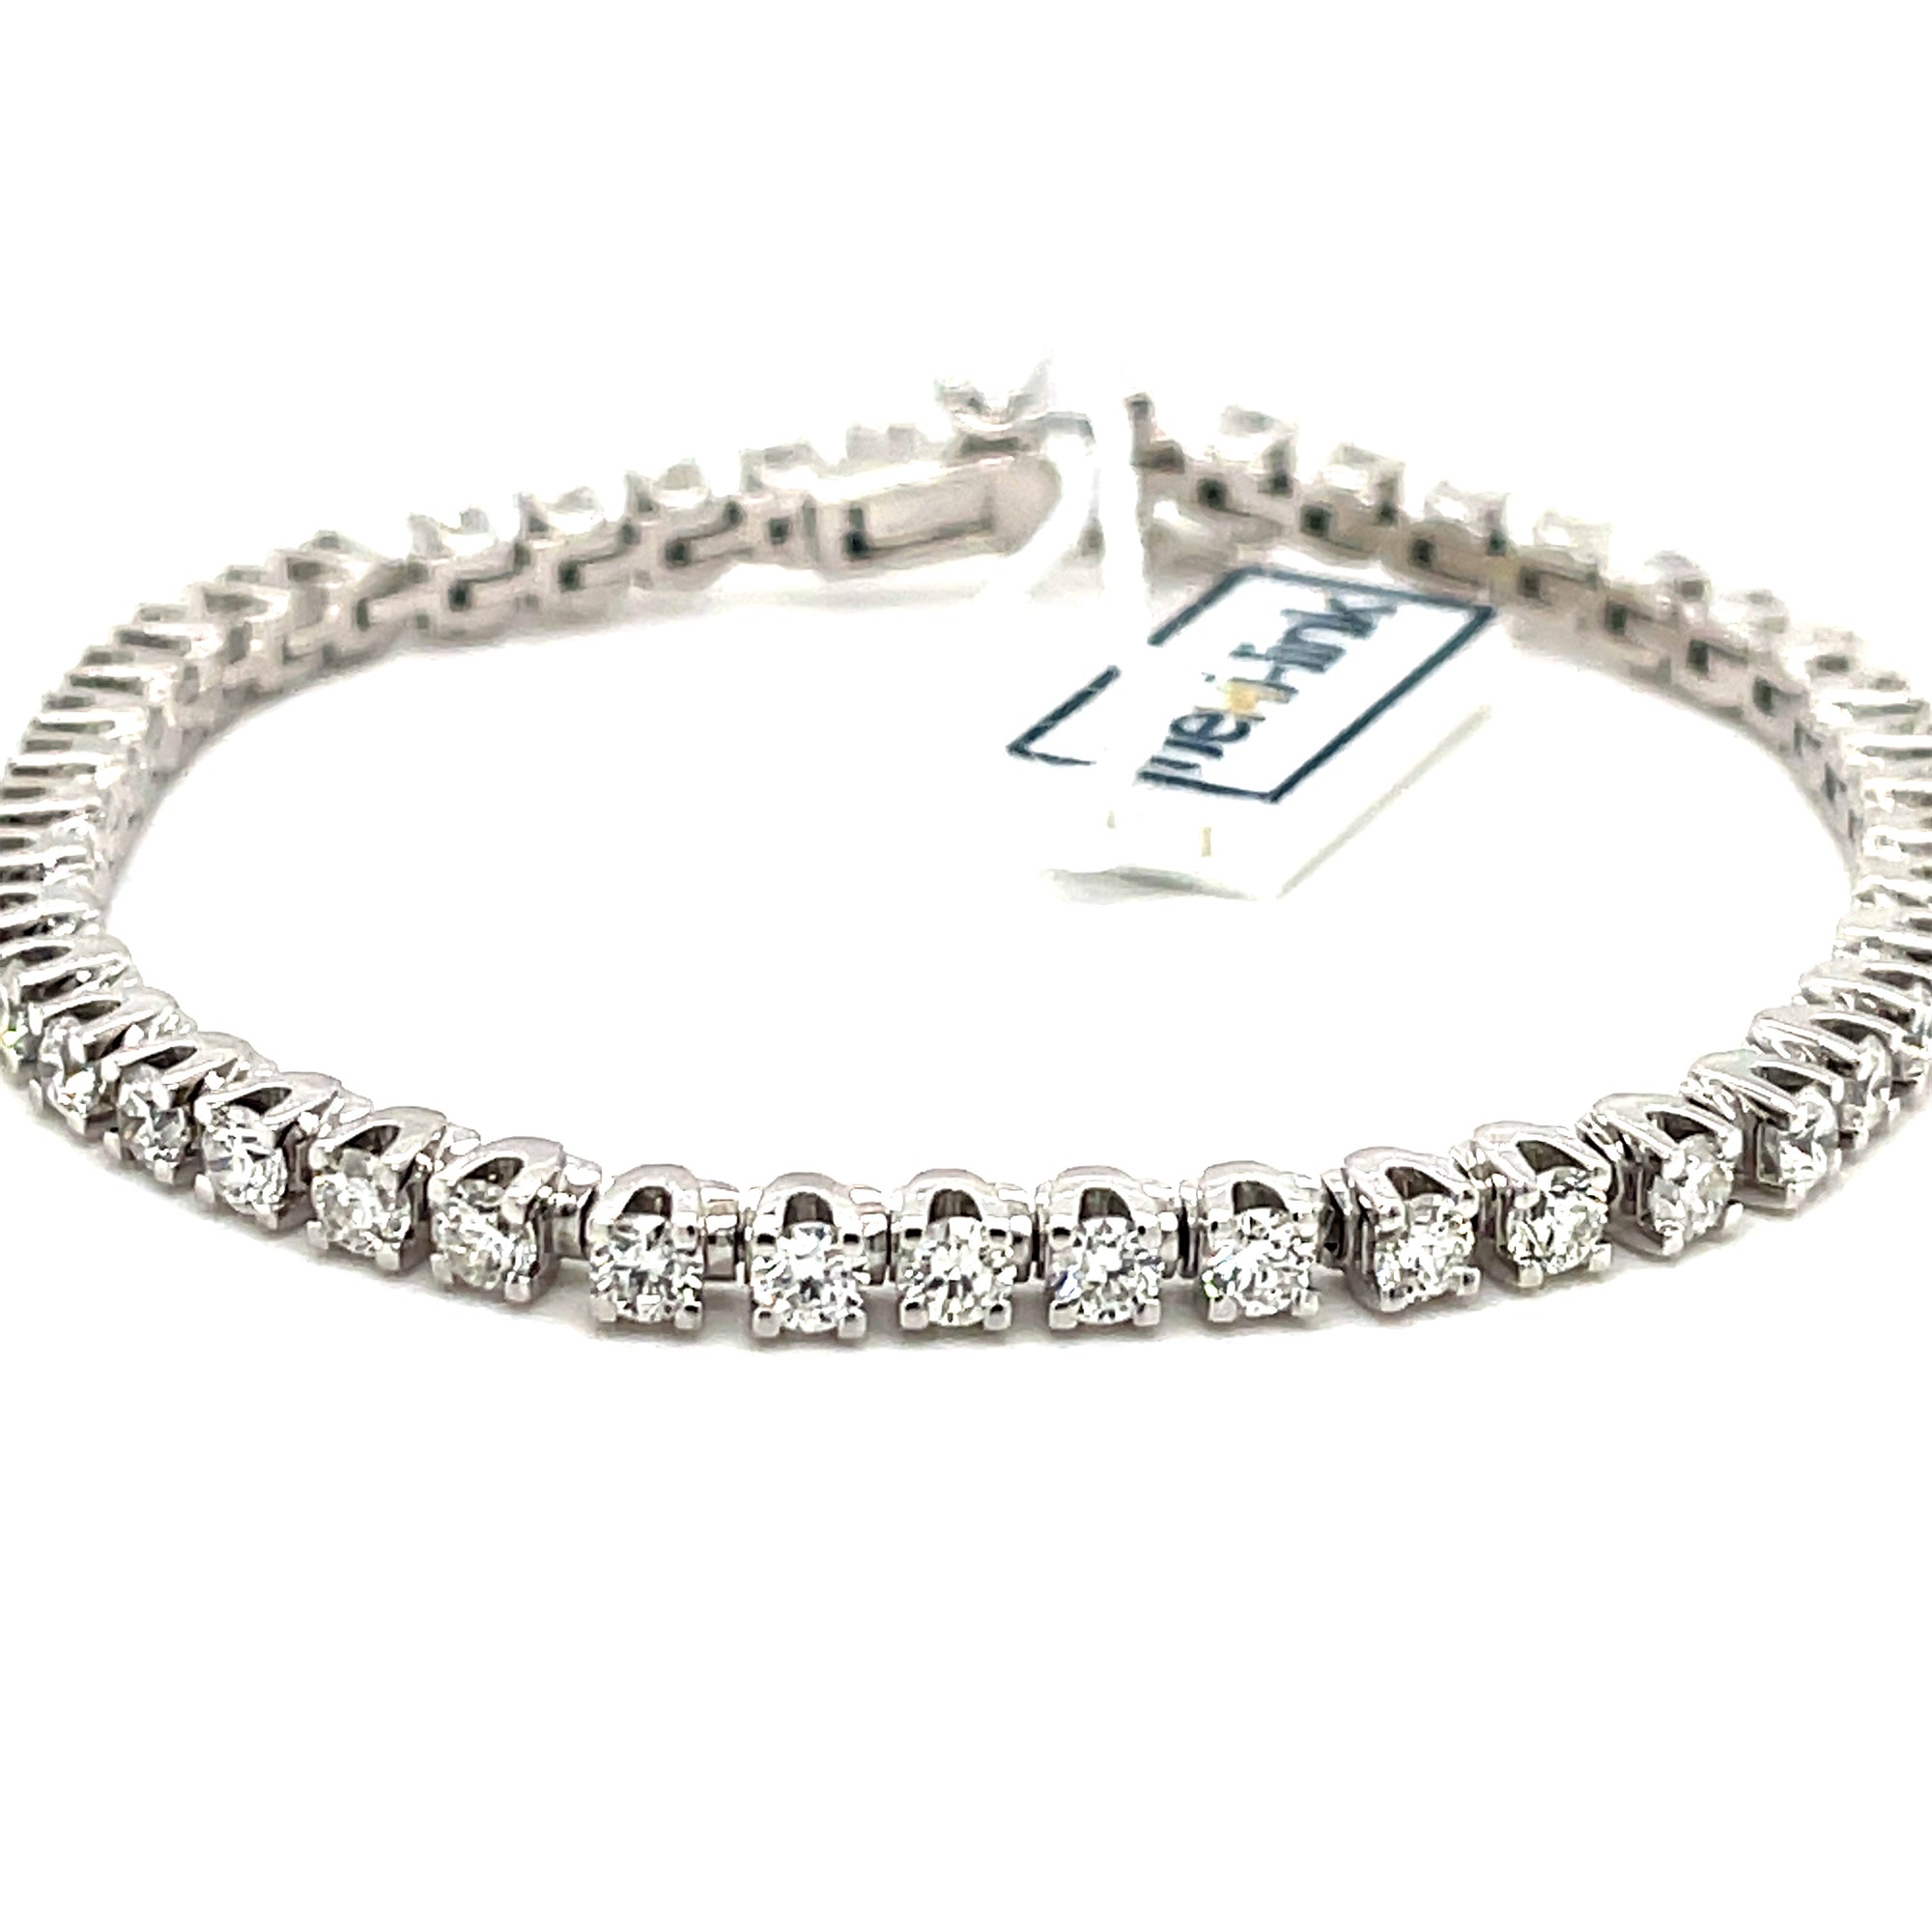 5.04ct round brilliant cut diamond tennis bracelet, 18kt white gold, G/H colour, SI clarity